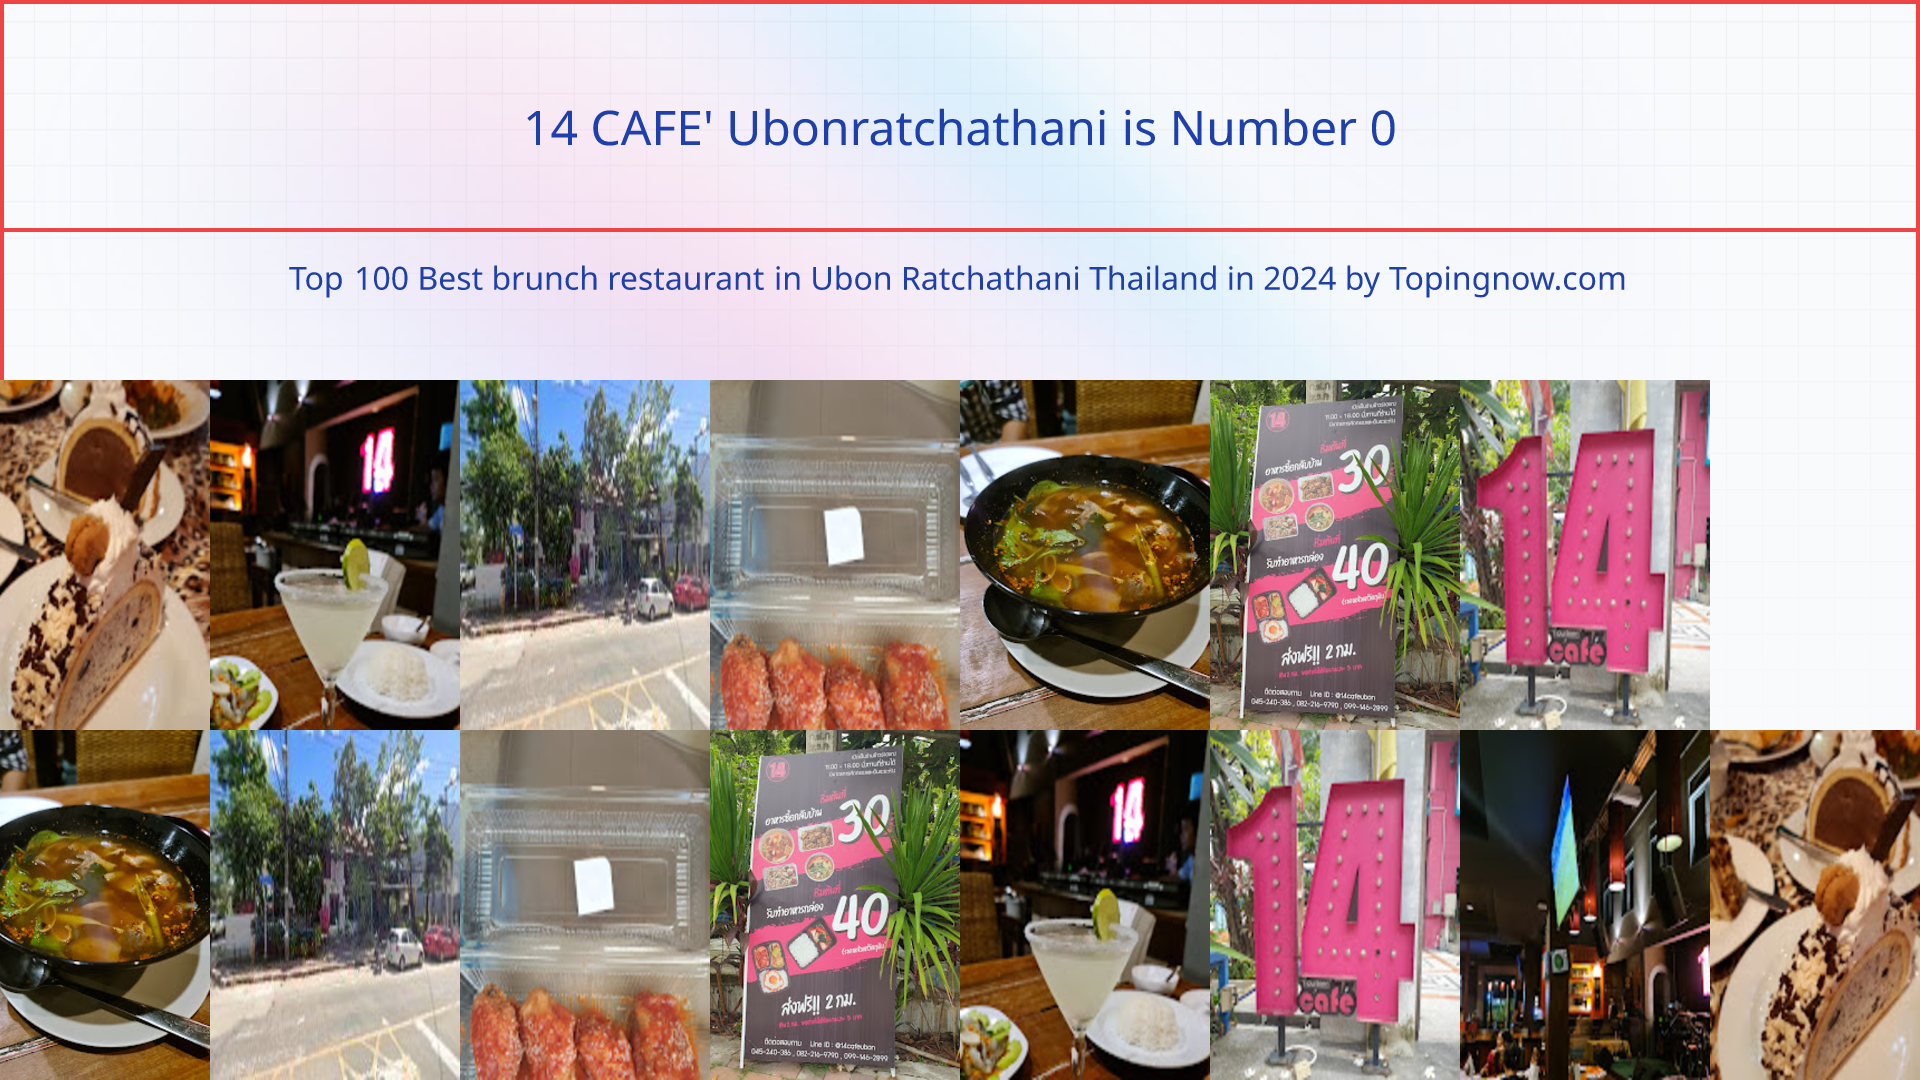 14 CAFE' Ubonratchathani: Top 100 Best brunch restaurant in Ubon Ratchathani Thailand in 2024